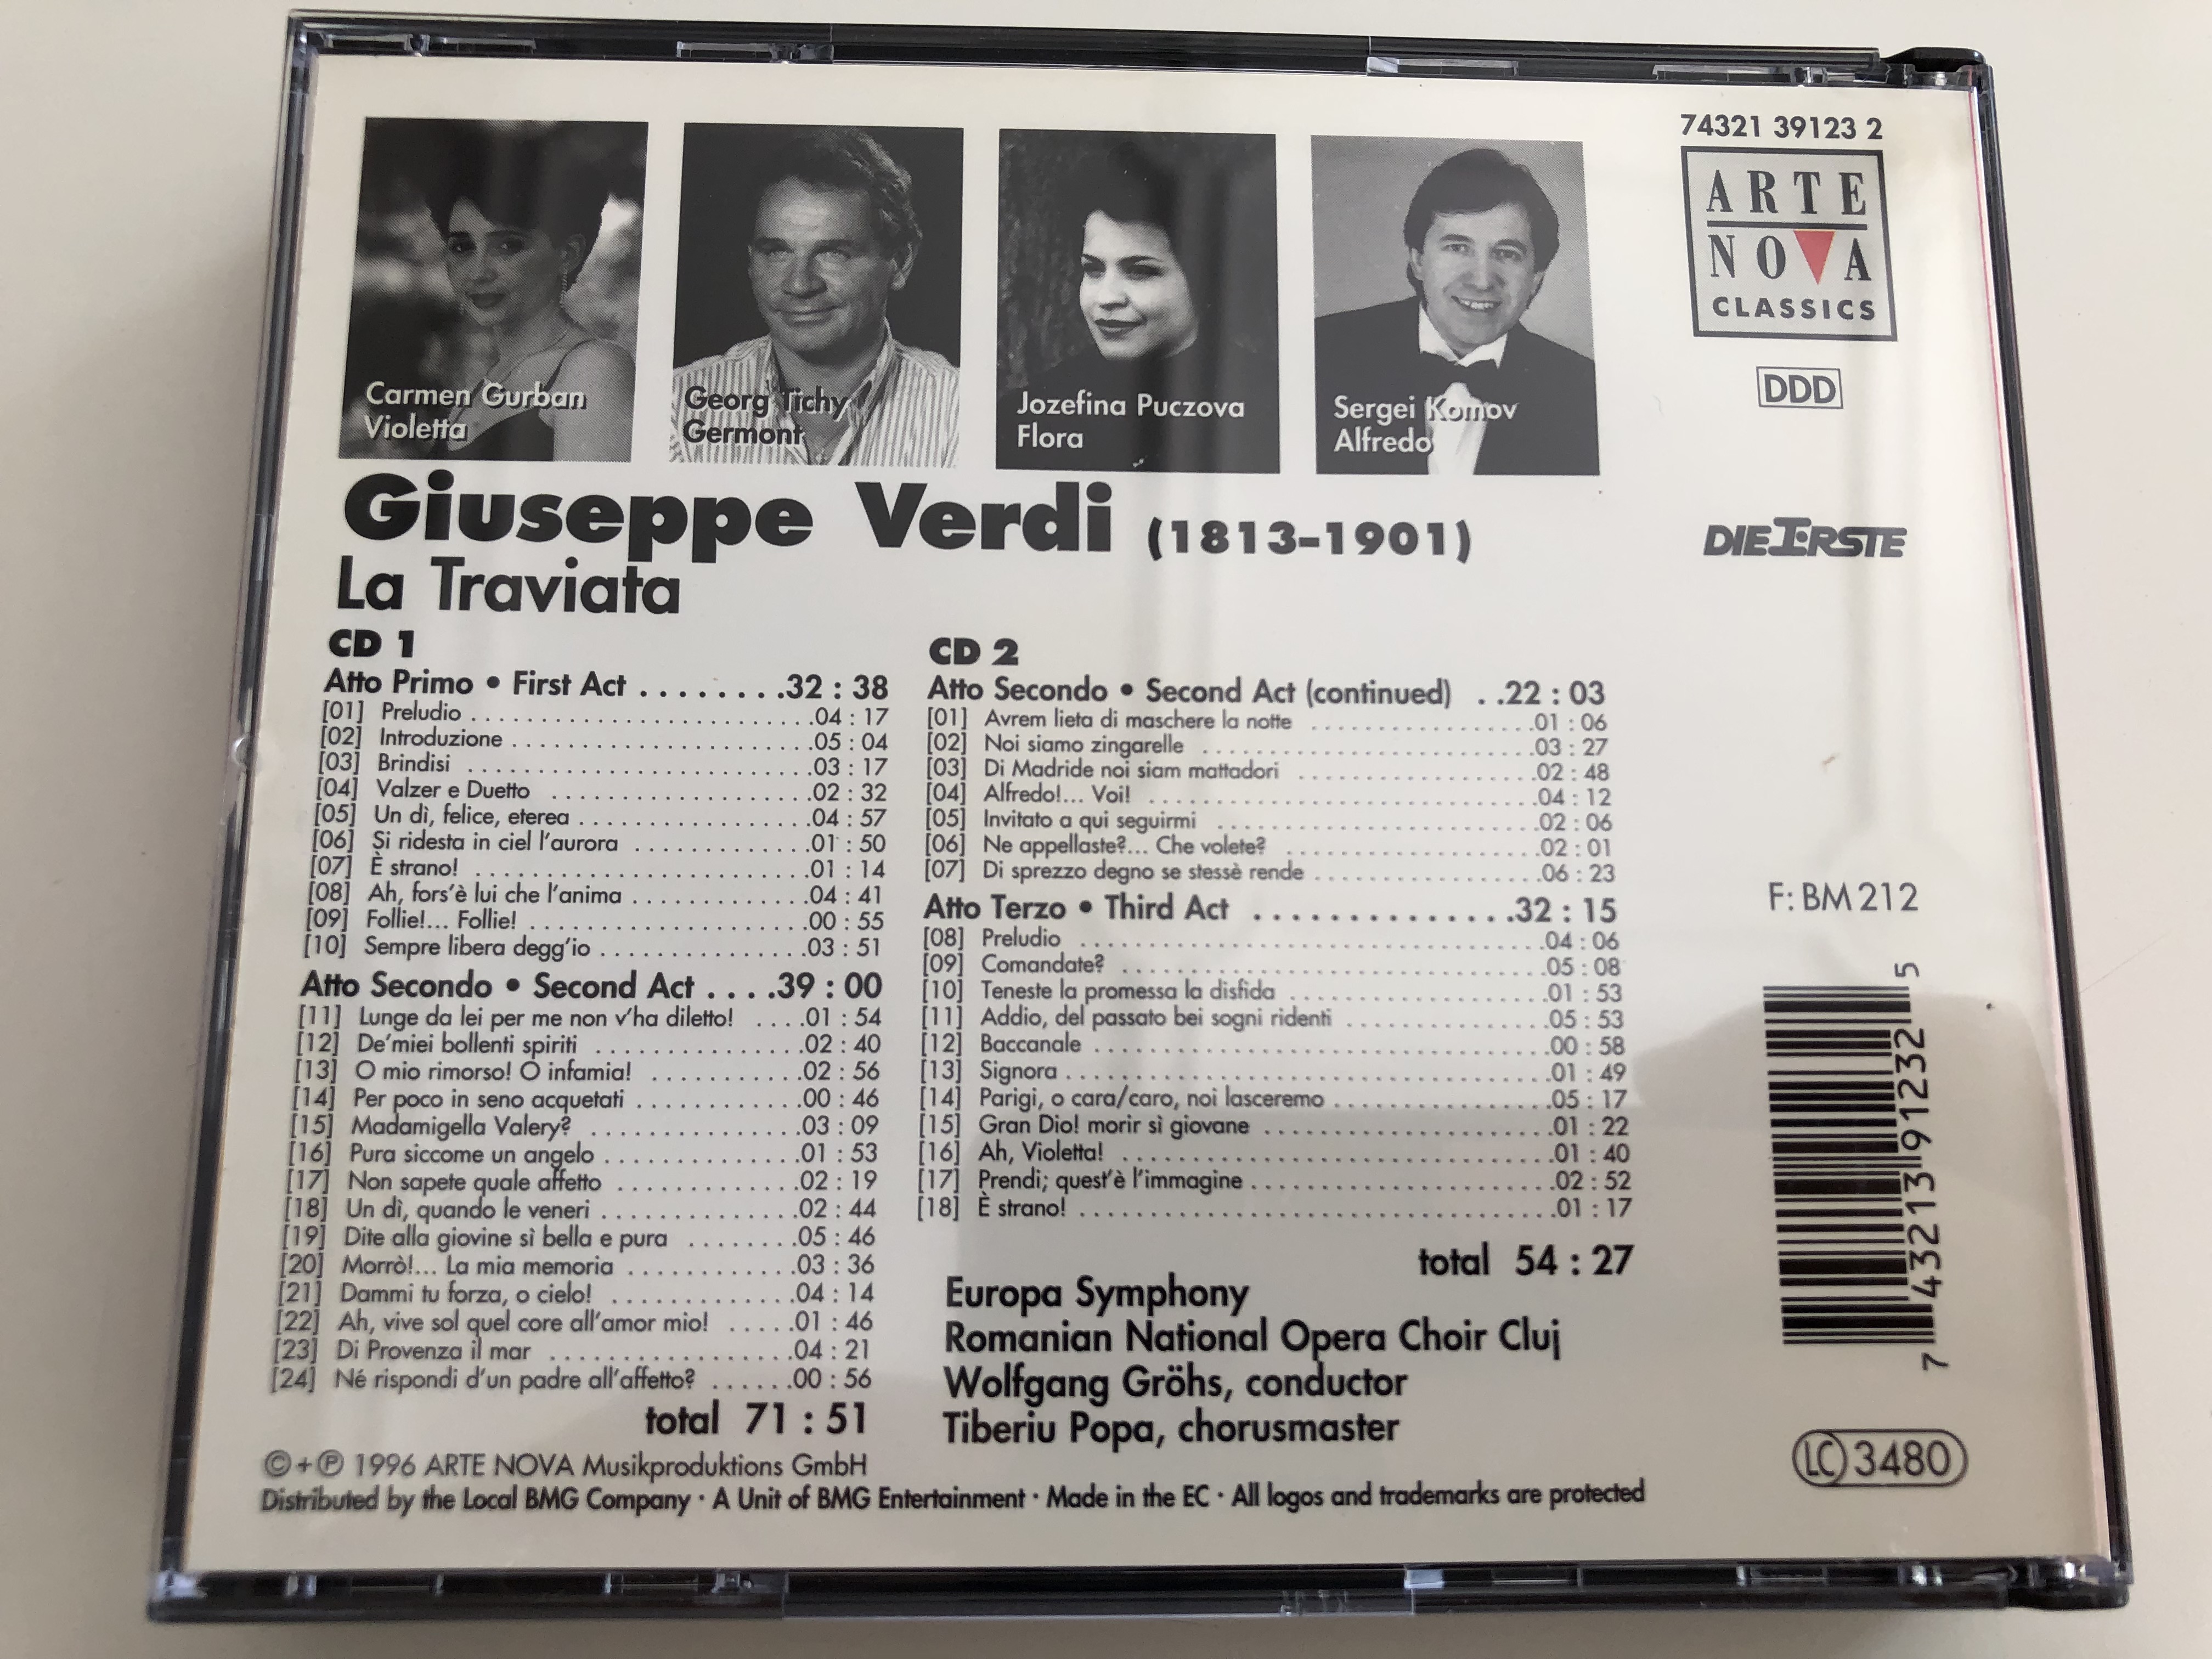 giuseppe-verdi-la-traviata-2-cd-europa-symphony-wolfgang-gr-hs-conductor-arte-nova-classics-audio-cd-1996-complete-recording-11-.jpg